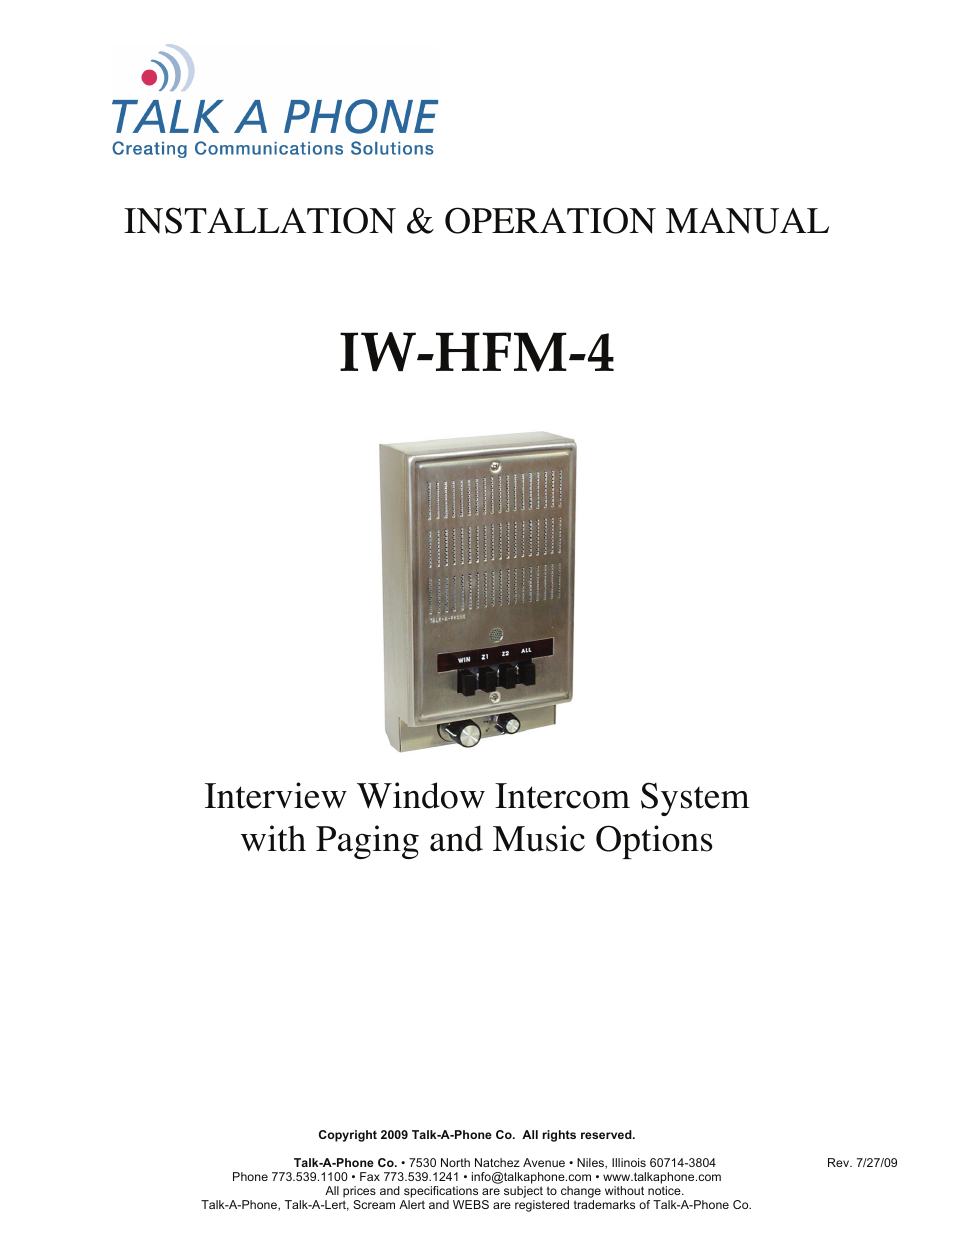 IW-HFM-4 Interview Window 4-Button Master